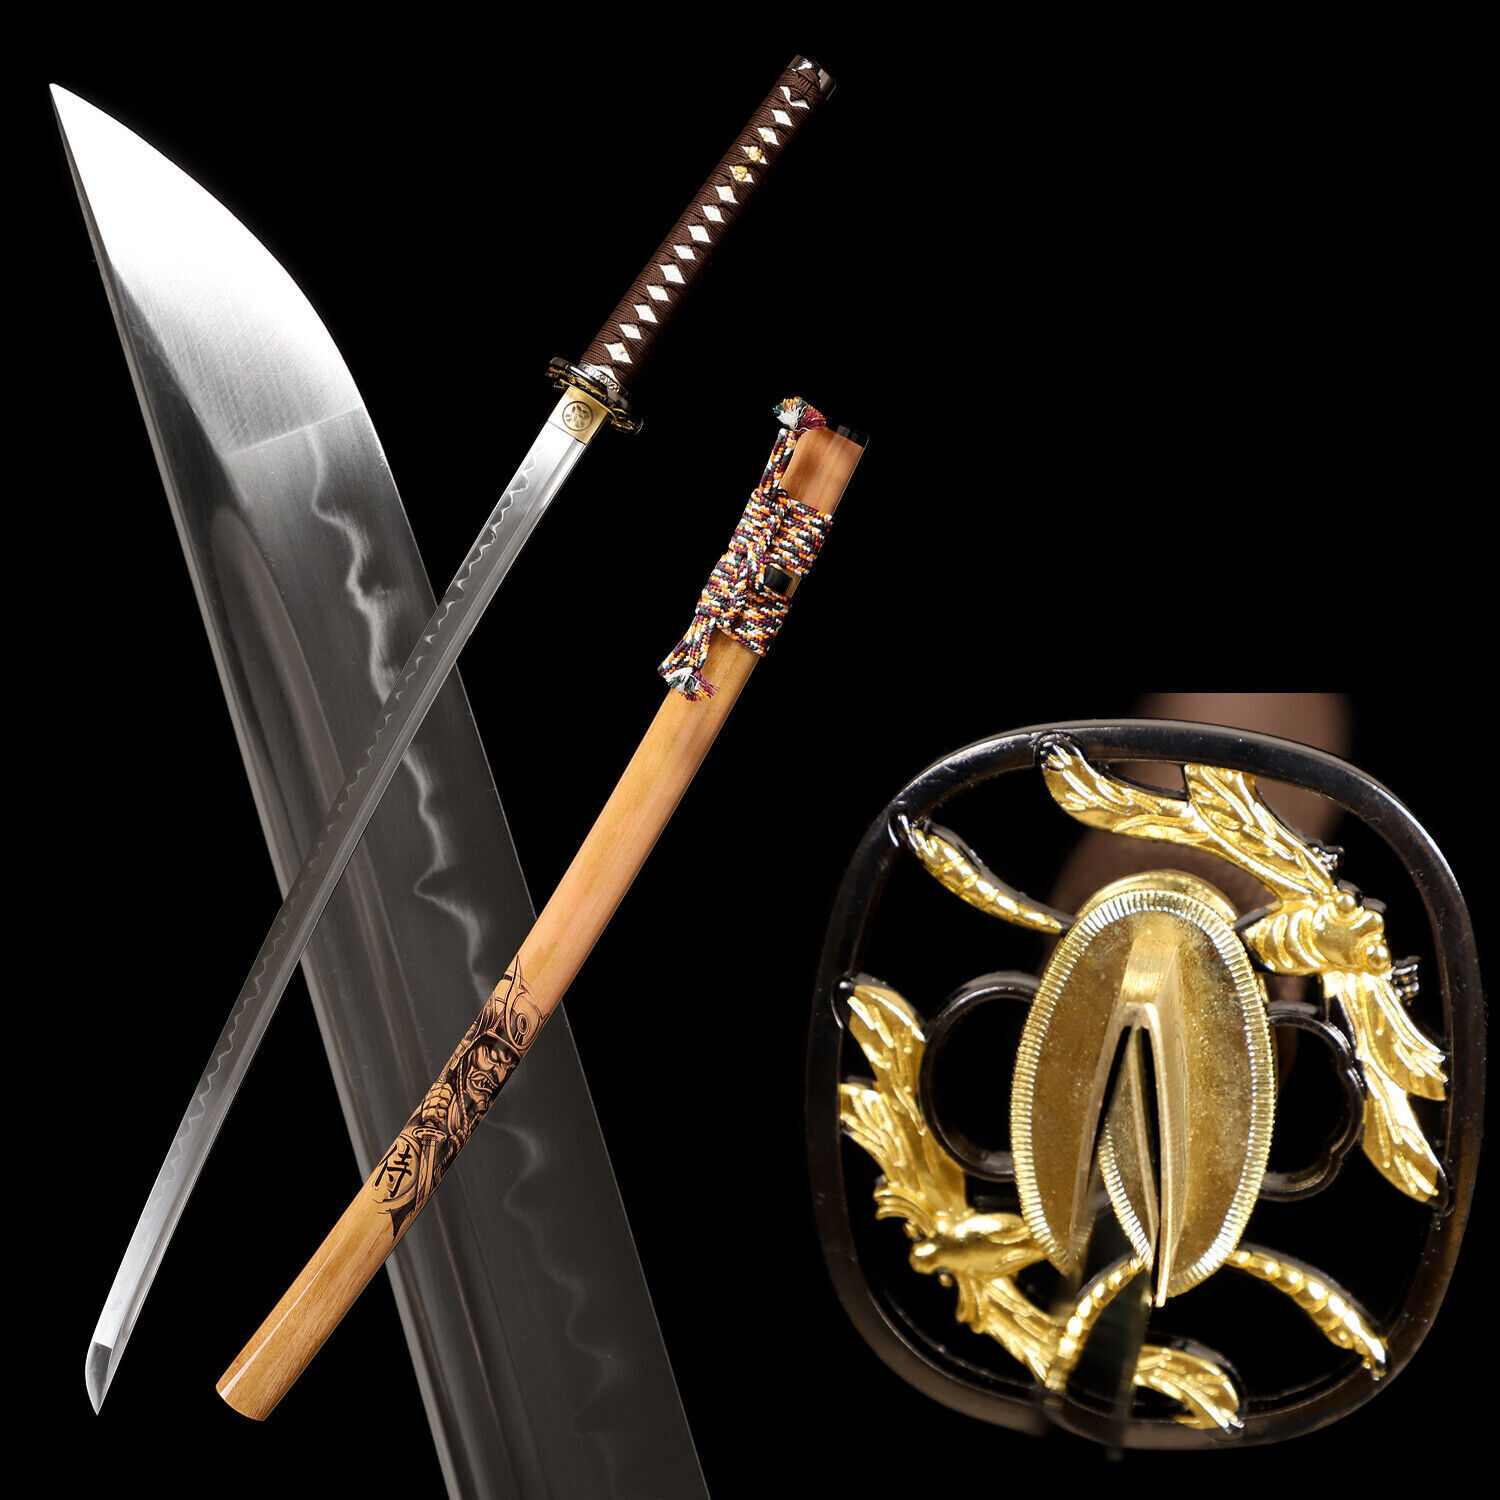 T10 Steel Clay Tempered Real Hamon Katana Japanese Samurai Sword Full Tang Sharp